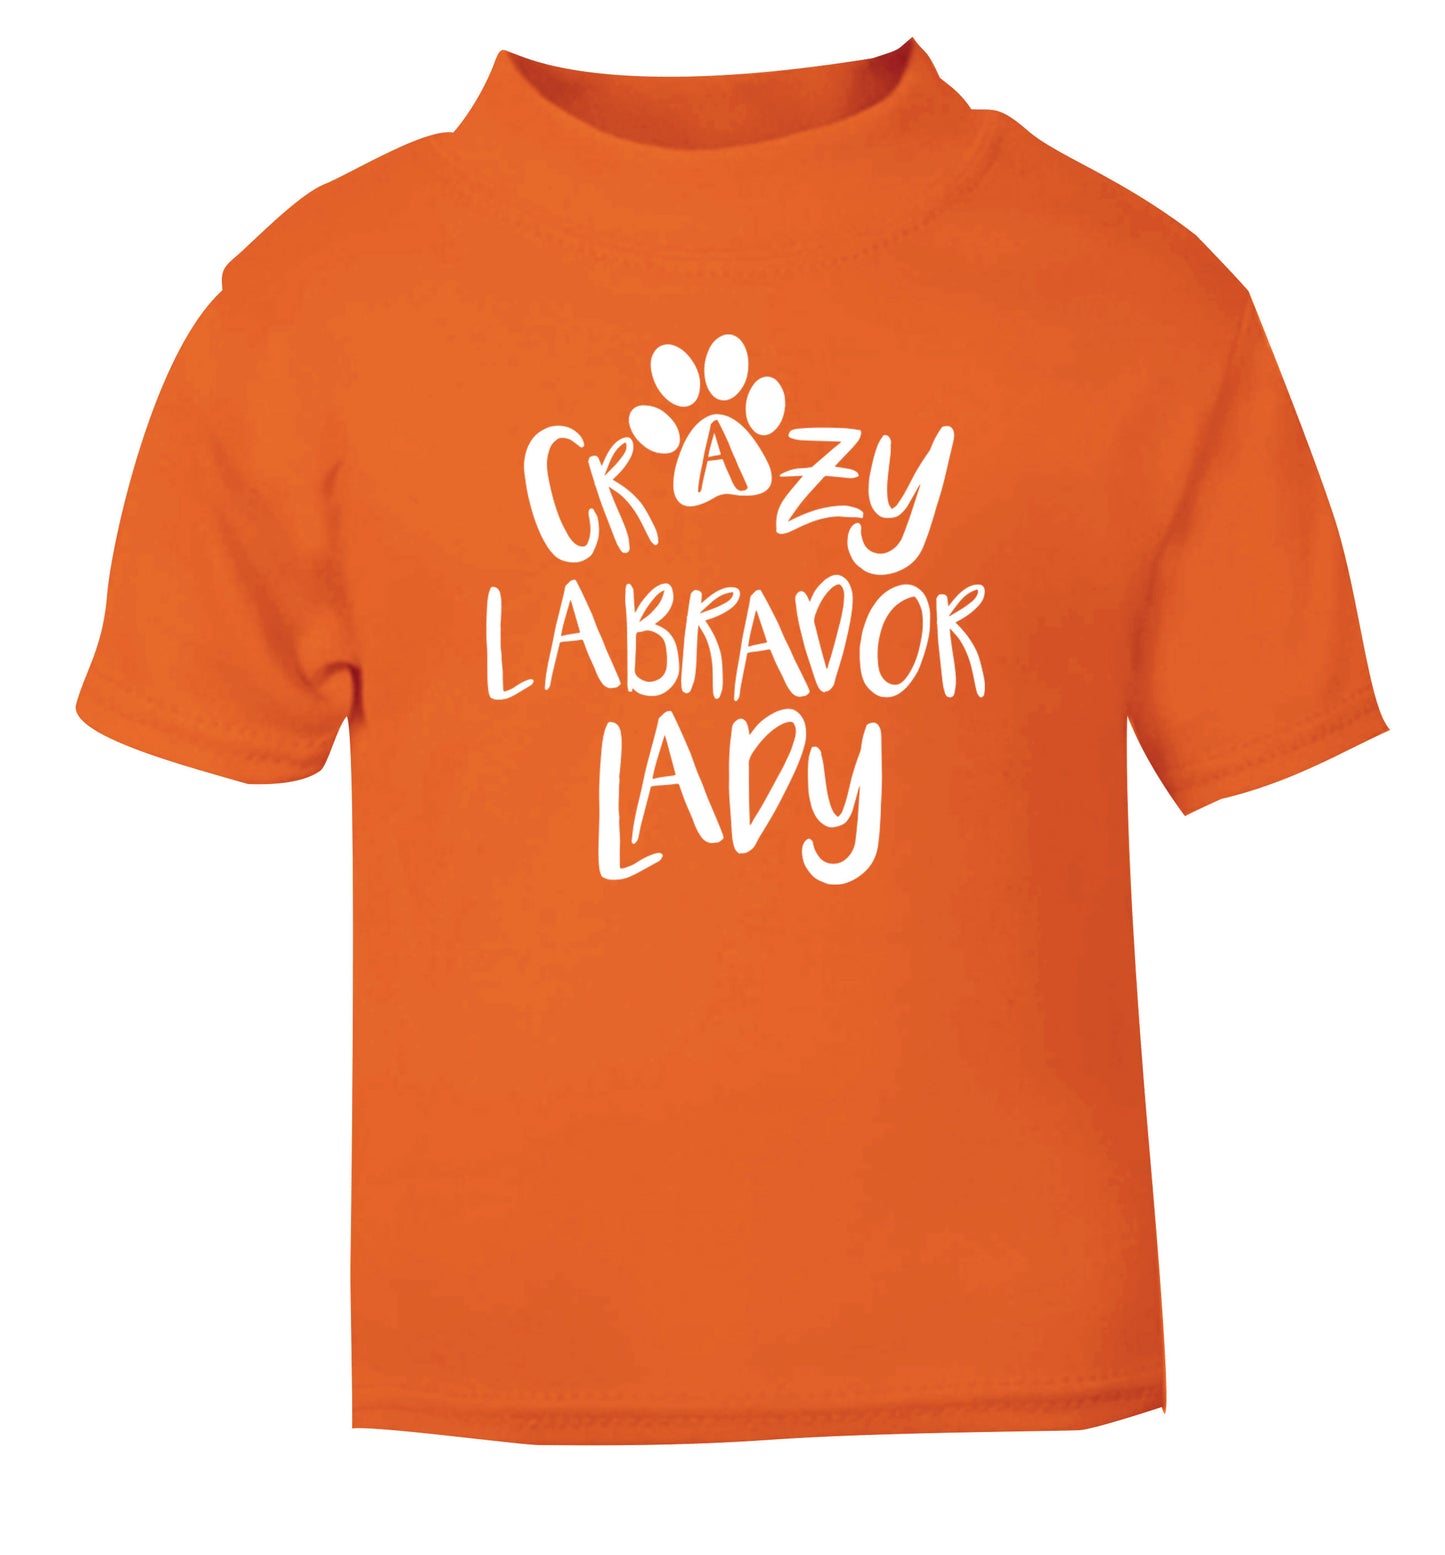 Crazy labrador lady orange Baby Toddler Tshirt 2 Years